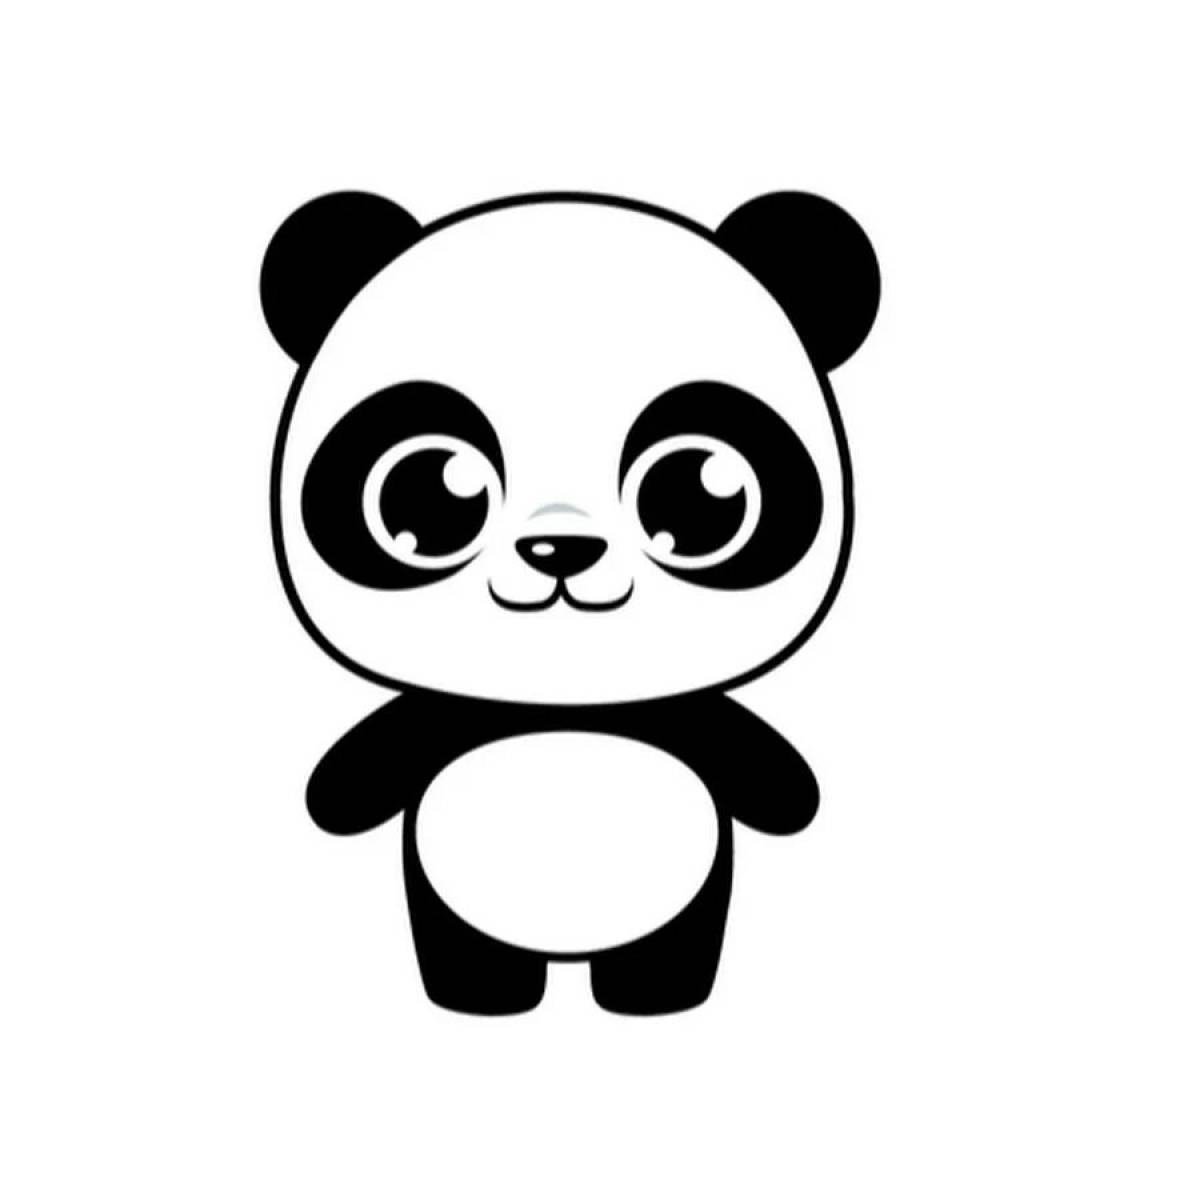 Cute little panda coloring book